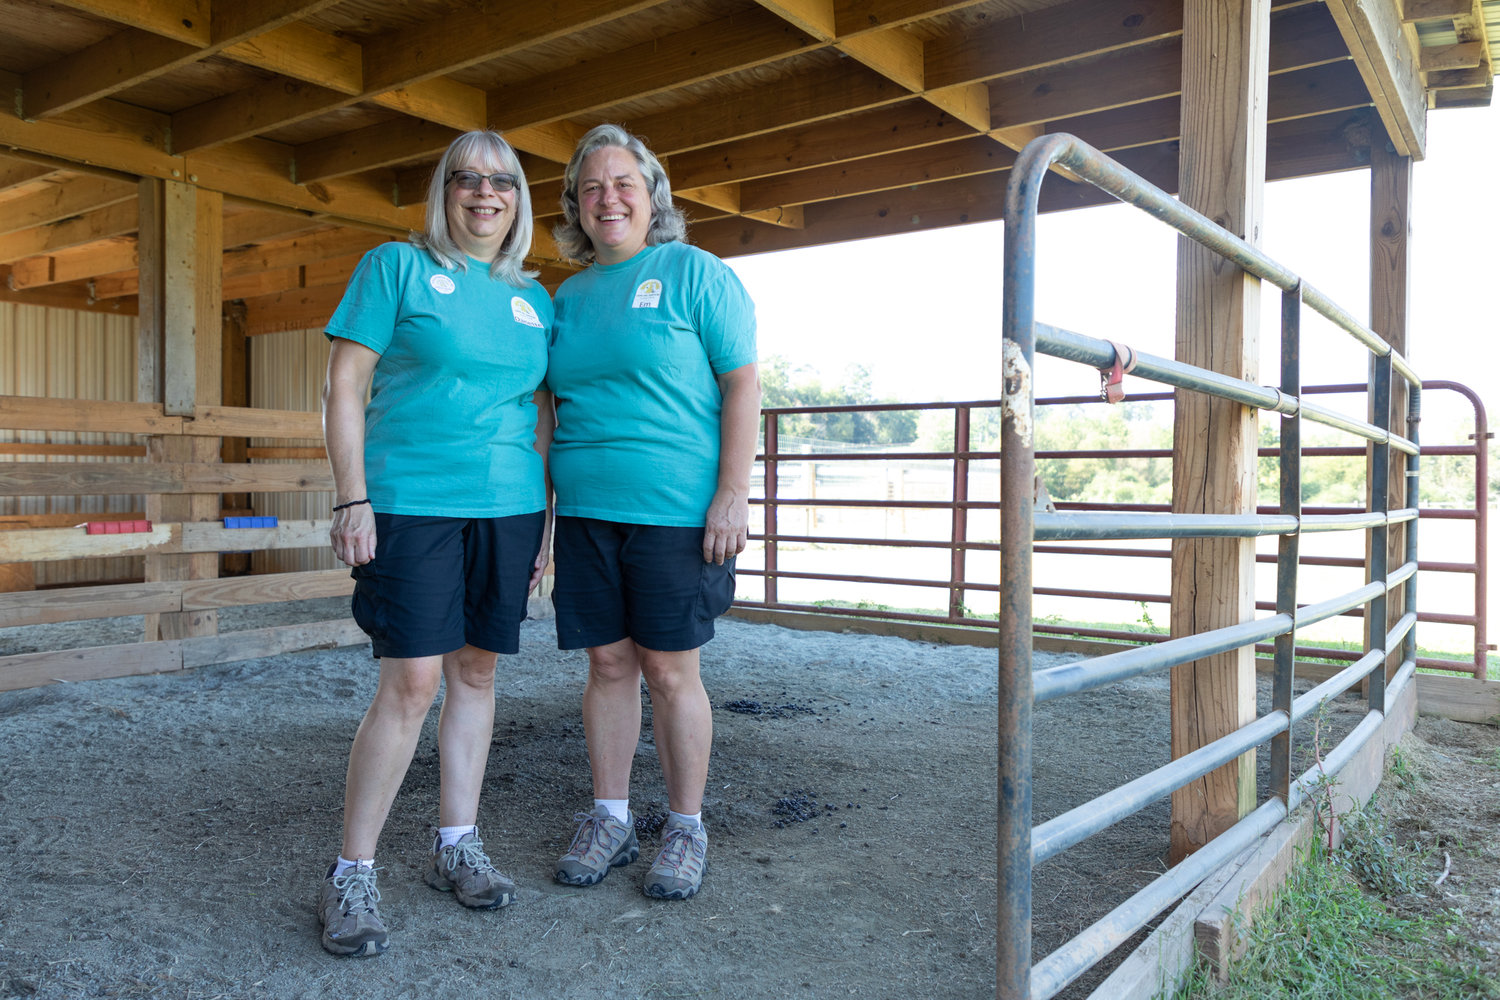 Danette Boezio, left, and Em Stecker, right, owners of Carolina Sunshine Alpaca Farm, pose for a portrait on Saturday.